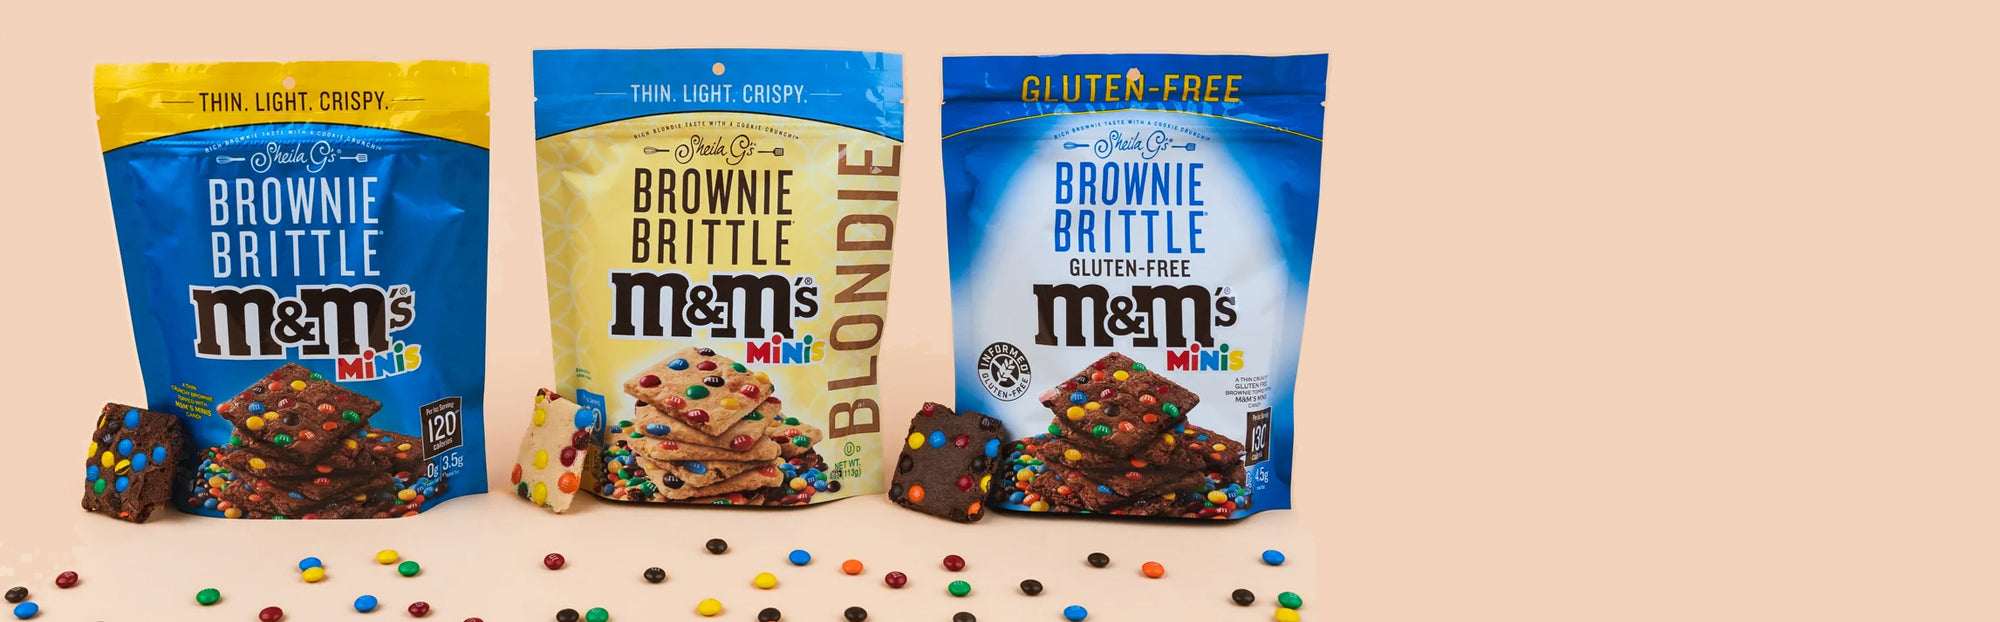 M&M's Brownie Bites & Milk Chocolate Sharing Pouch Bag